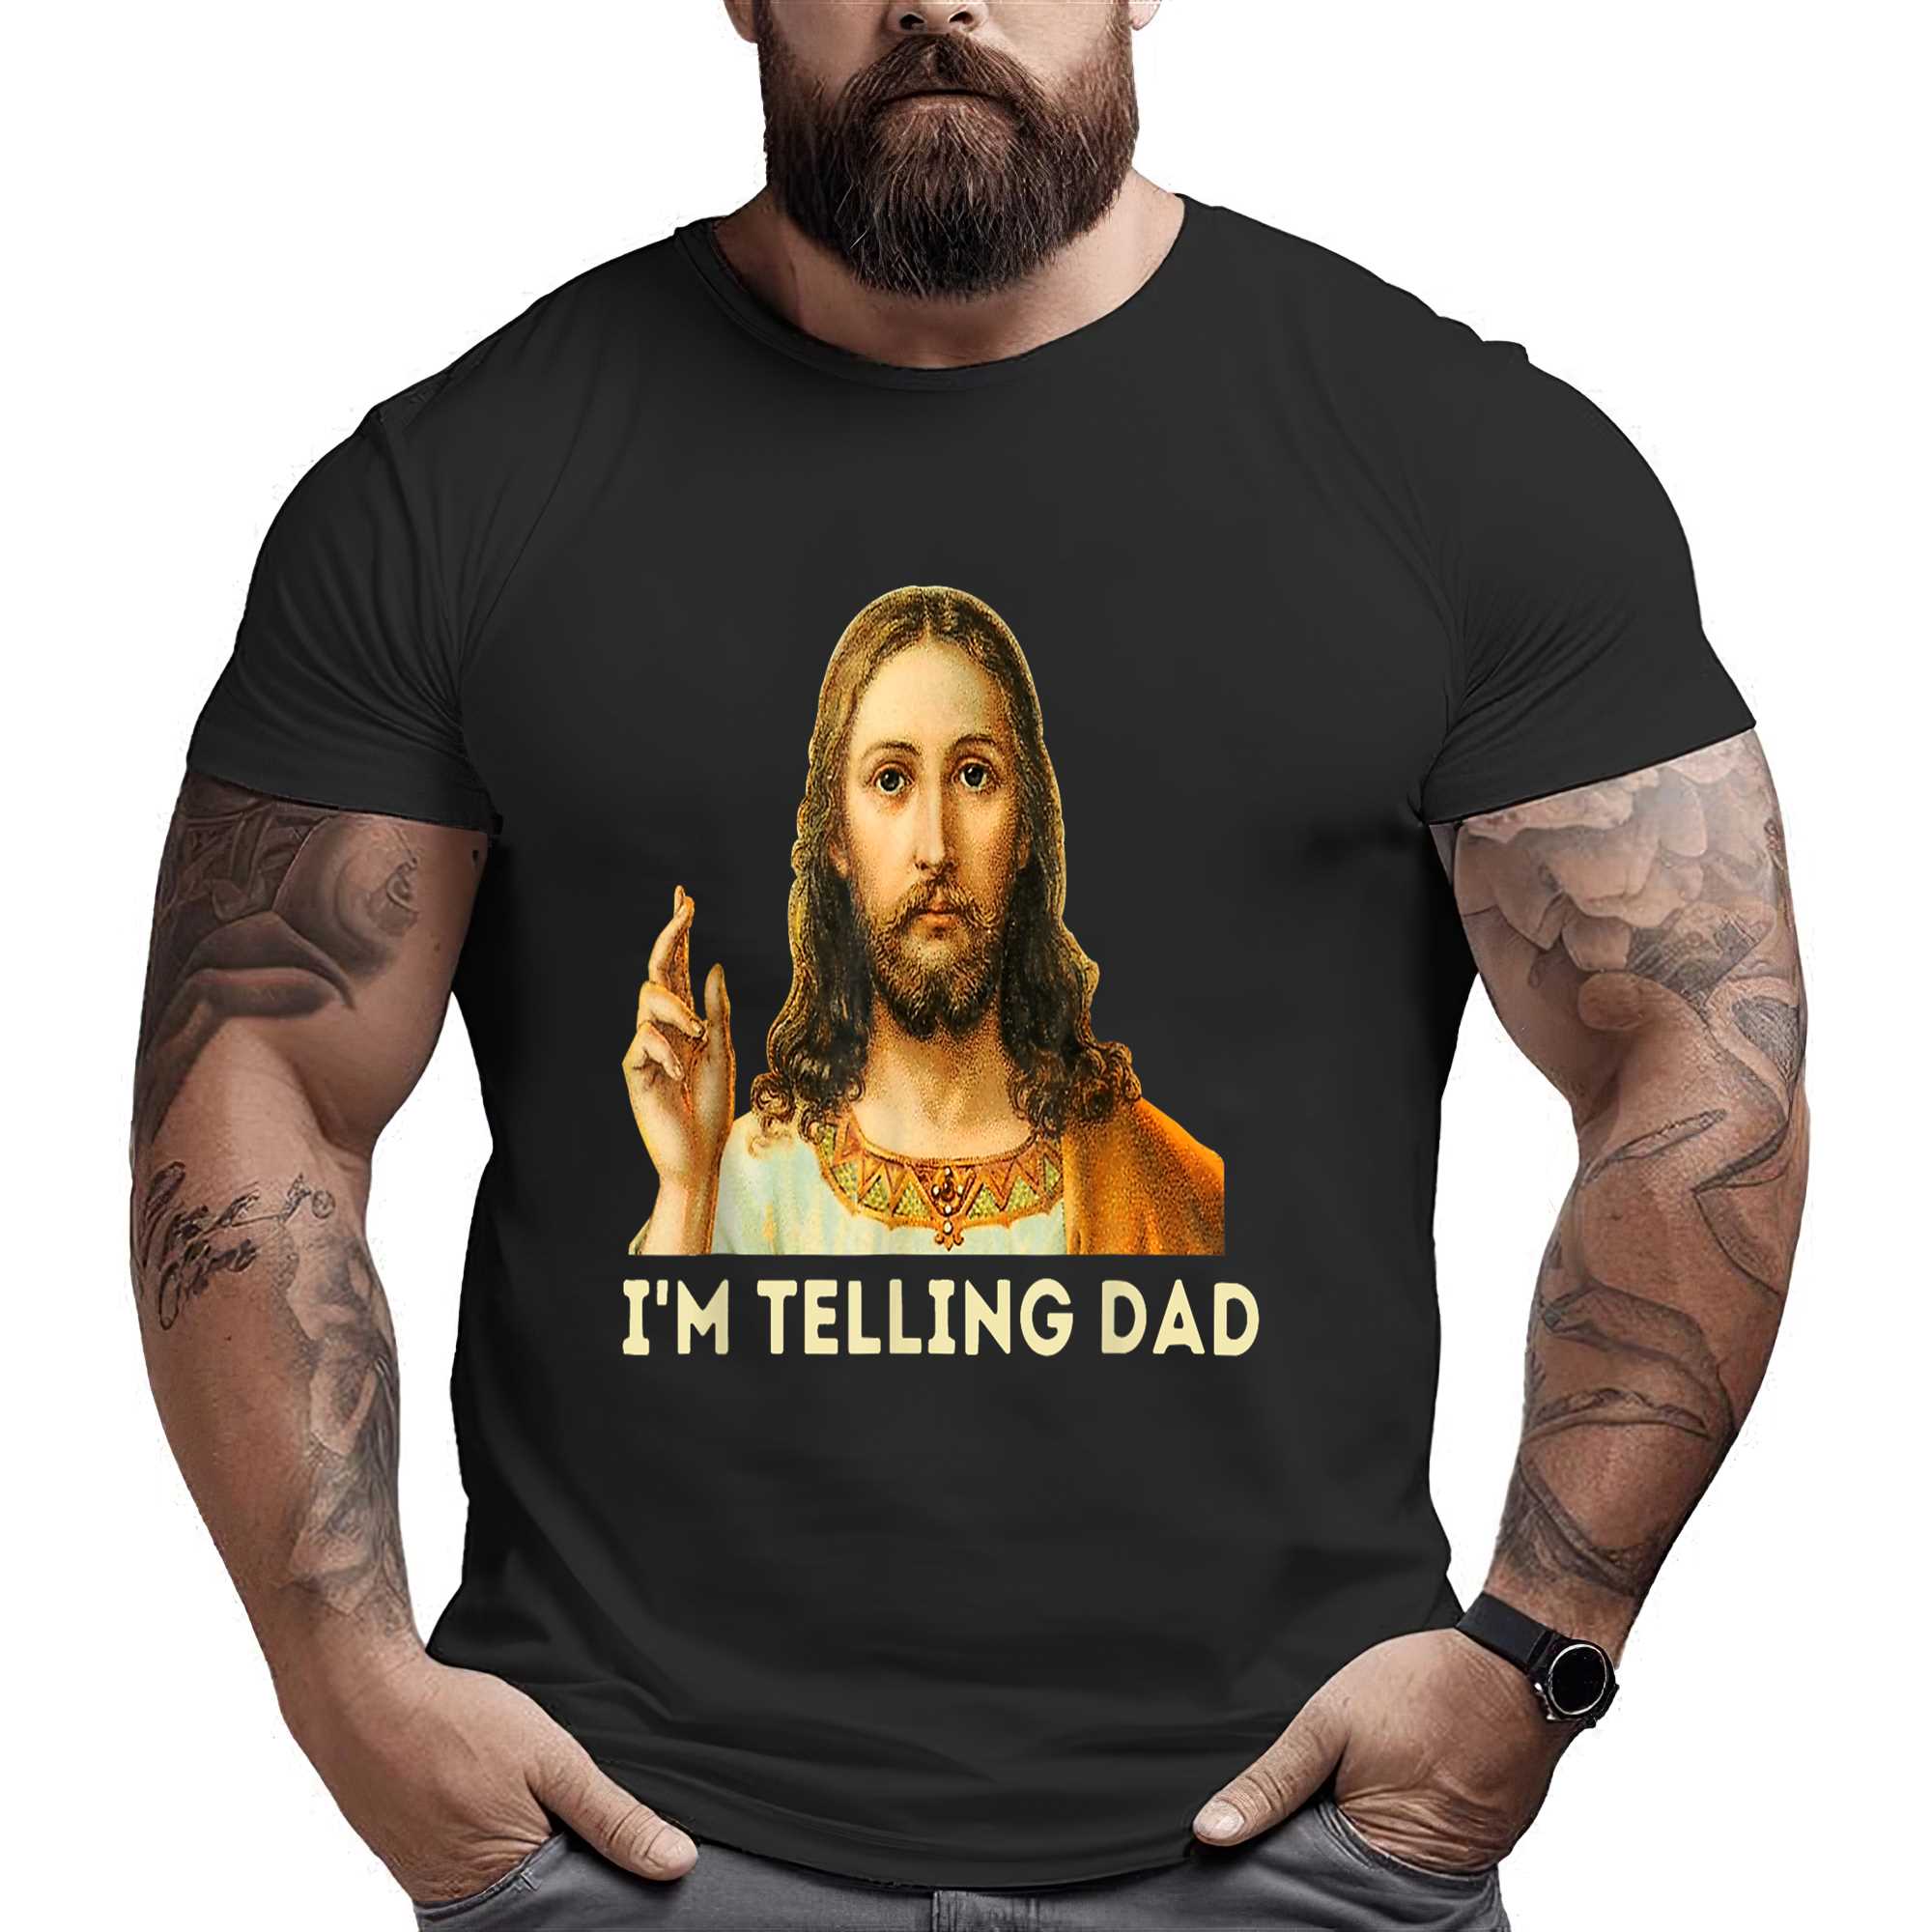 I’m Telling Dad Shirt Funny Religious Christian Jesus Meme T-shirt